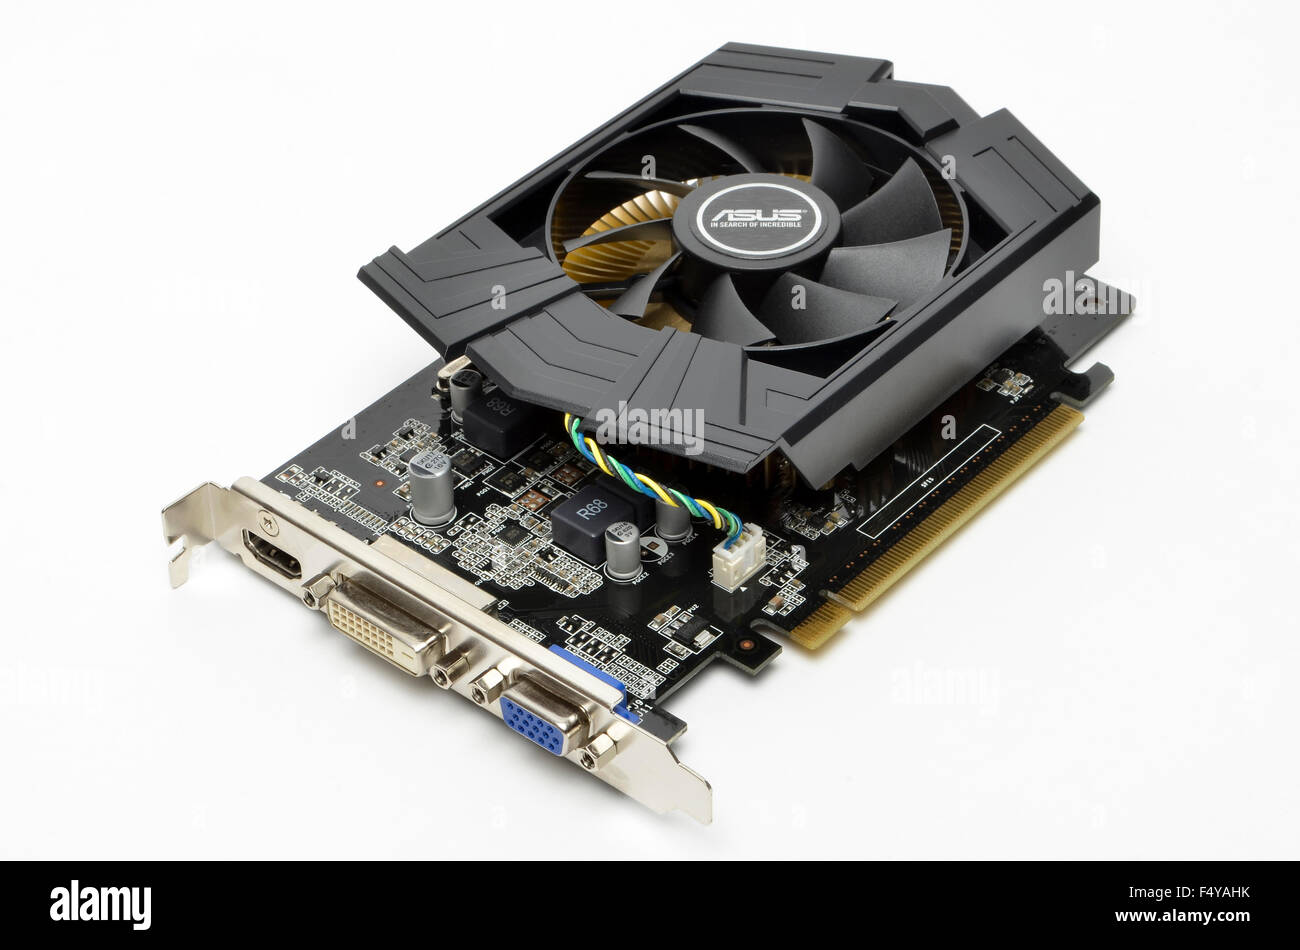 Gainward launches GeForce GT 740